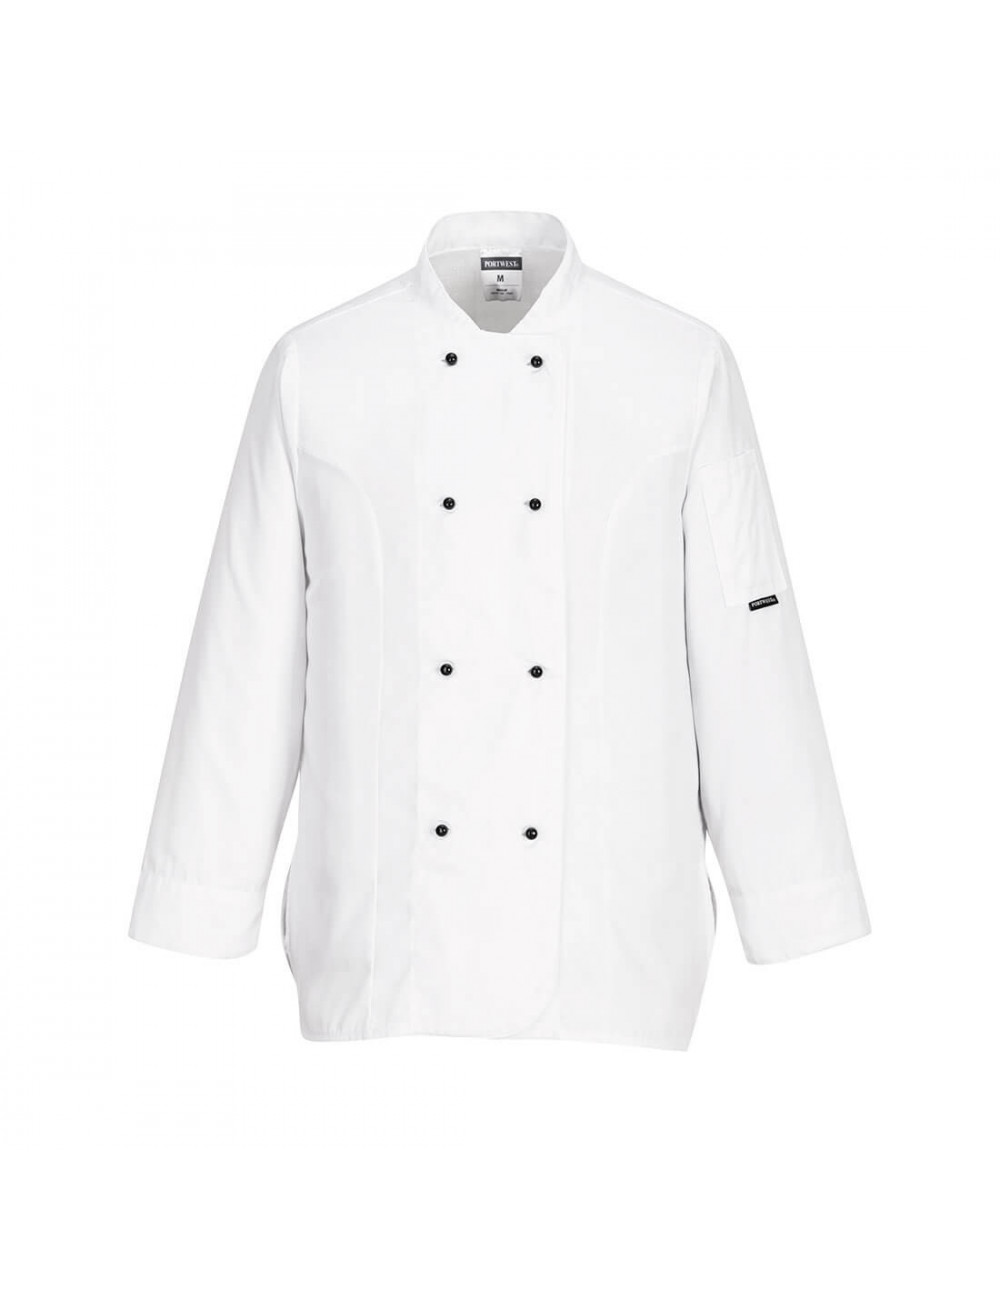 Chef rachel long sleeve shirt white Portwest